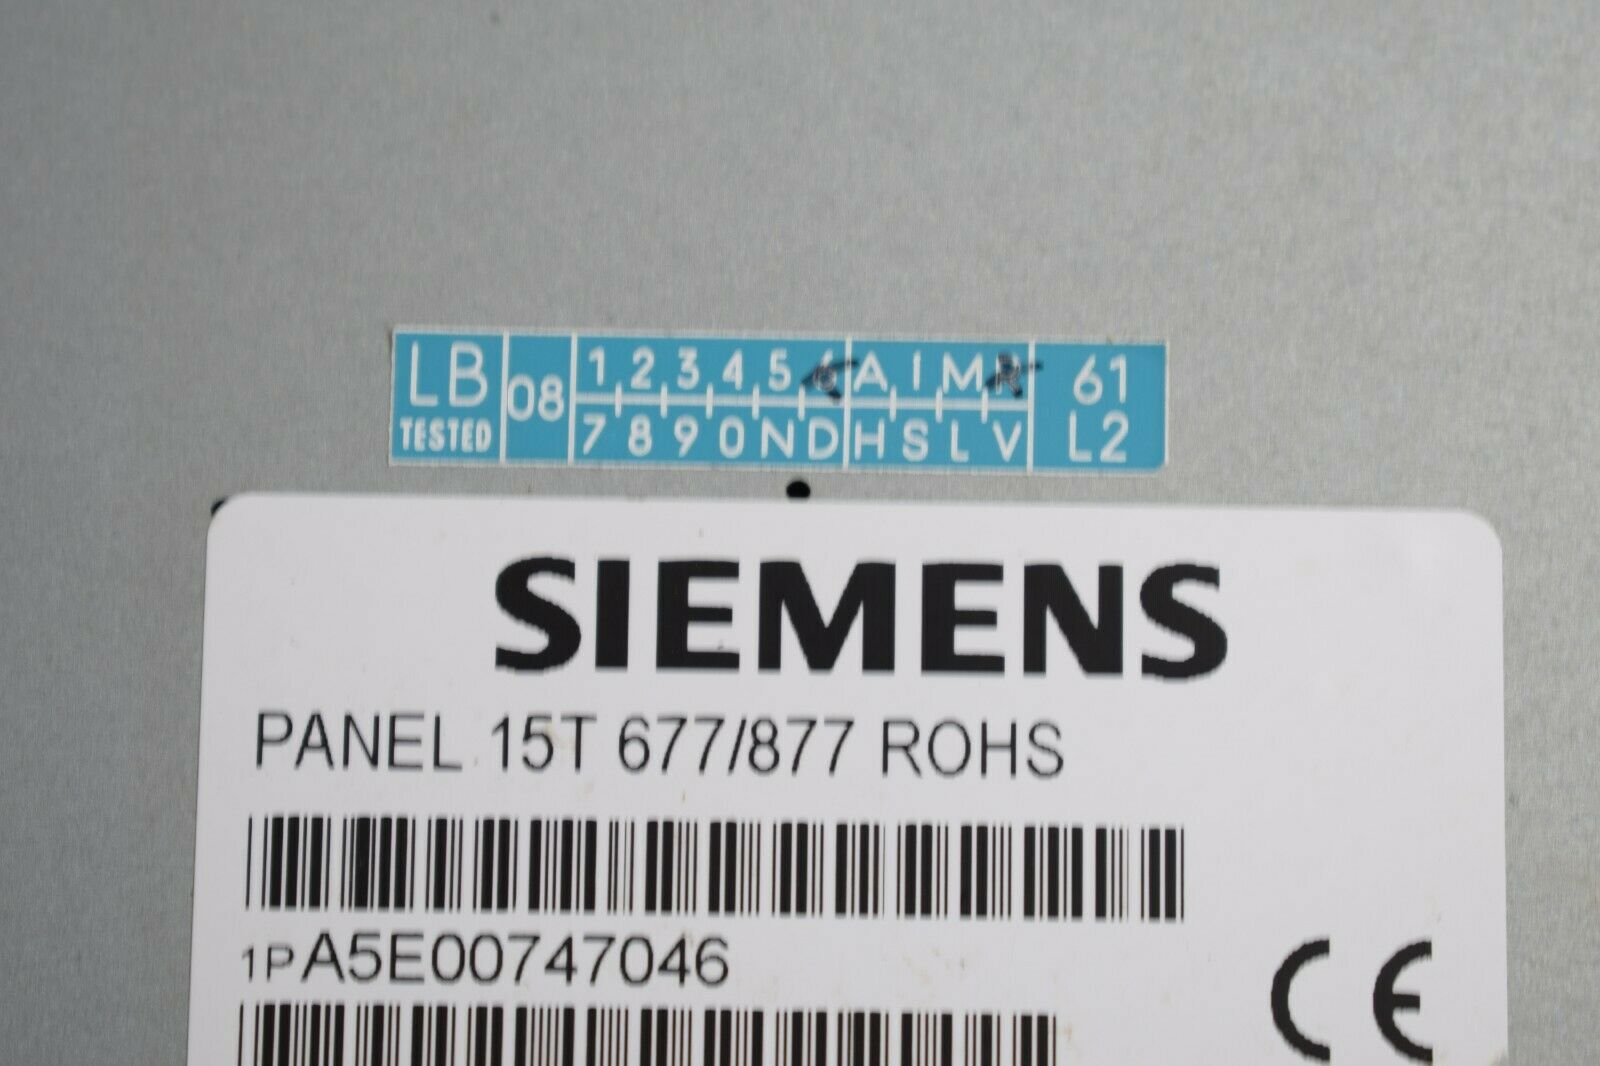 Siemens Panel 15T 677/877 ROHS